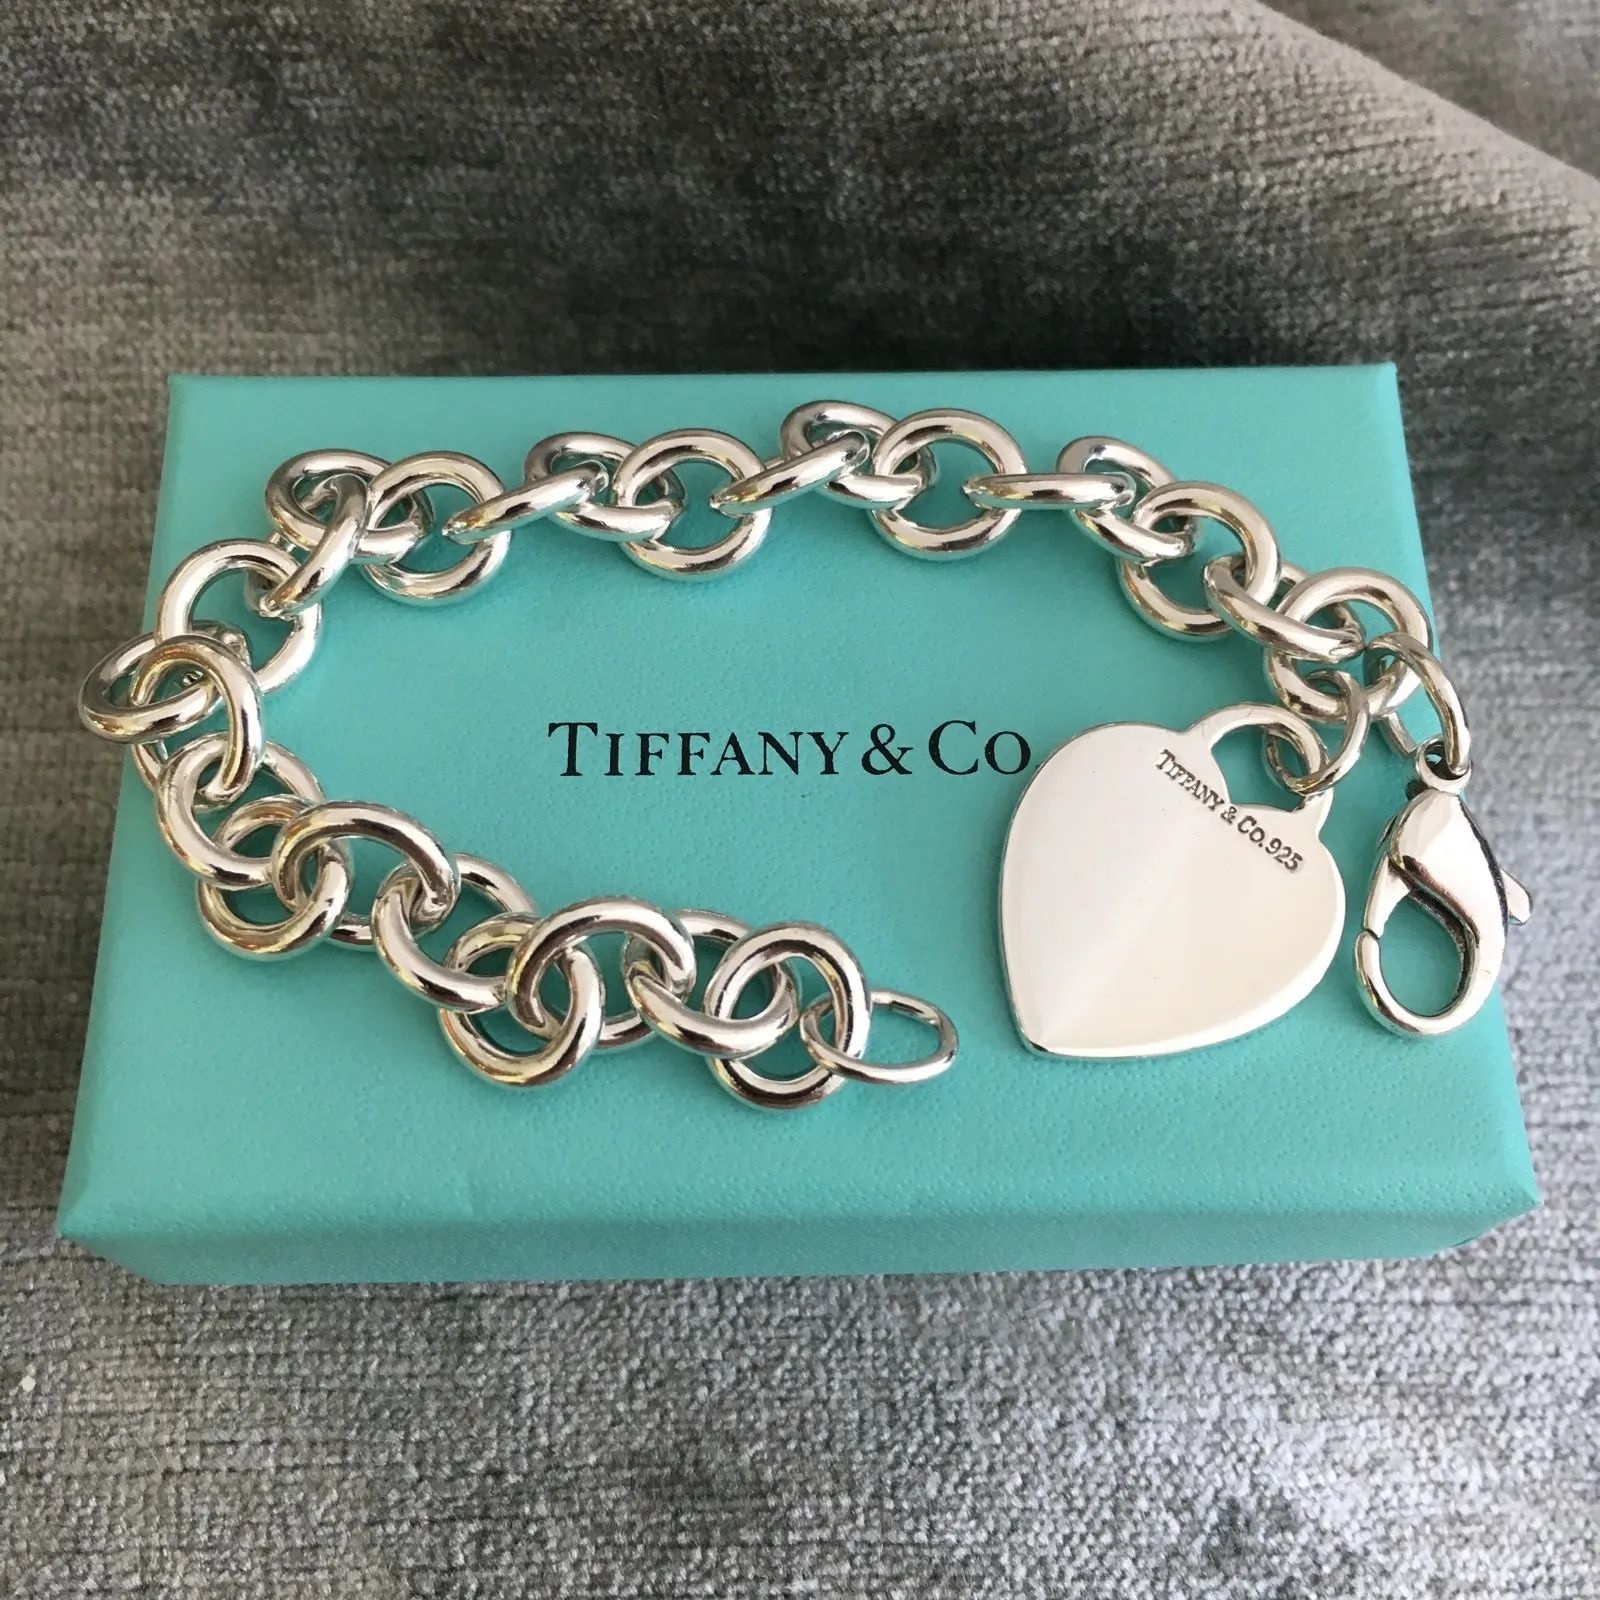 Tiffany & Co Blank Heart Tag Charm Bracelet with Blue Box in Sterling Silver  | eBay | eBay US